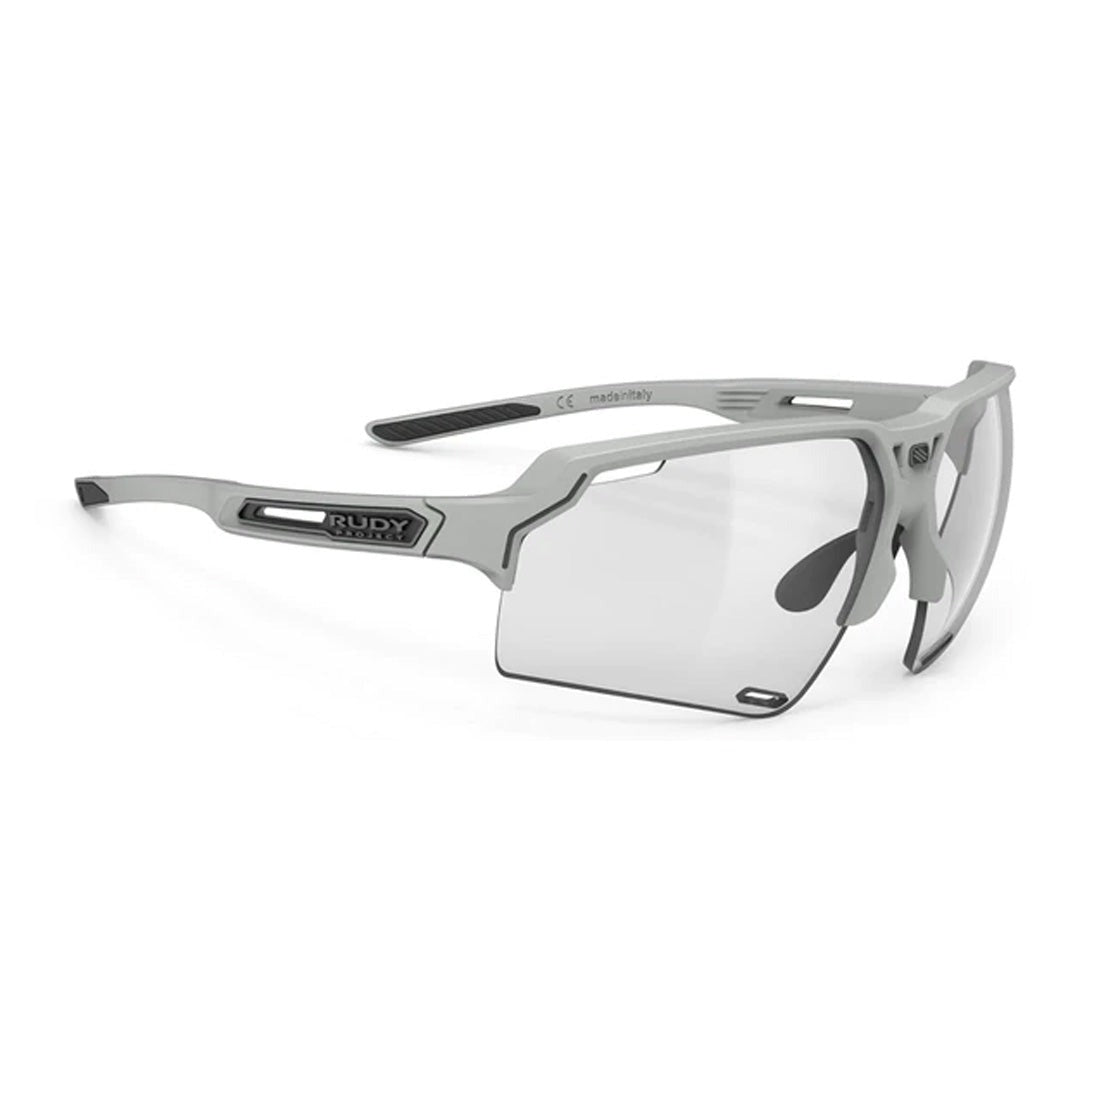 Deltabeat Eyewear in Light Grey Matte - ImpactX® Photochromic 2 Black